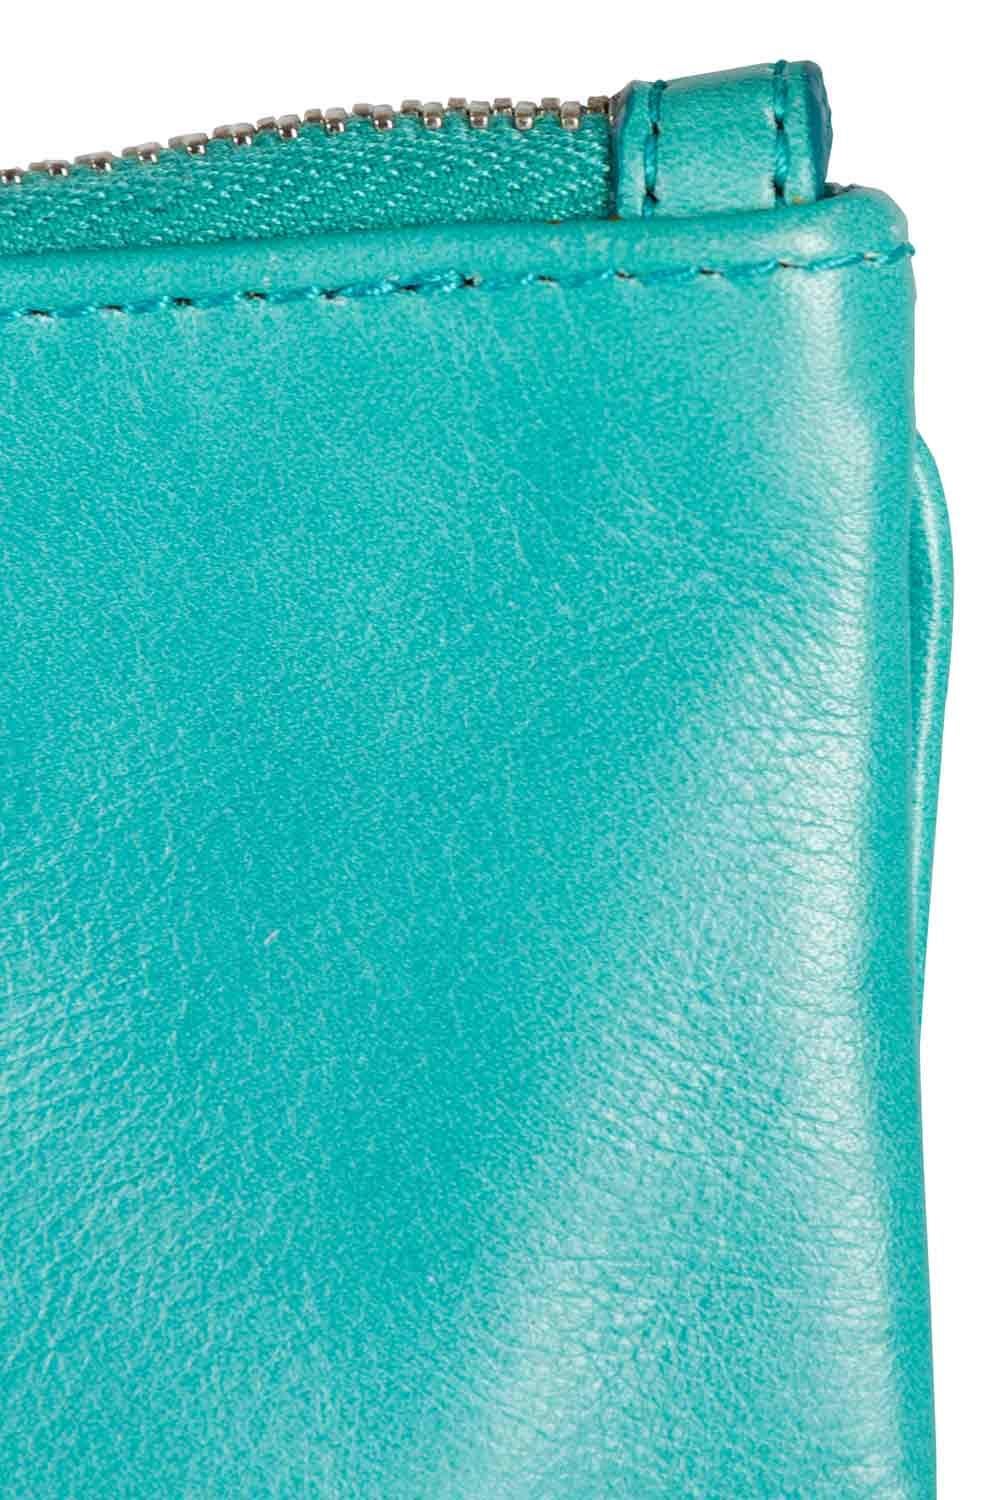 Jil Sander Aqua Green Leather Clutch 2